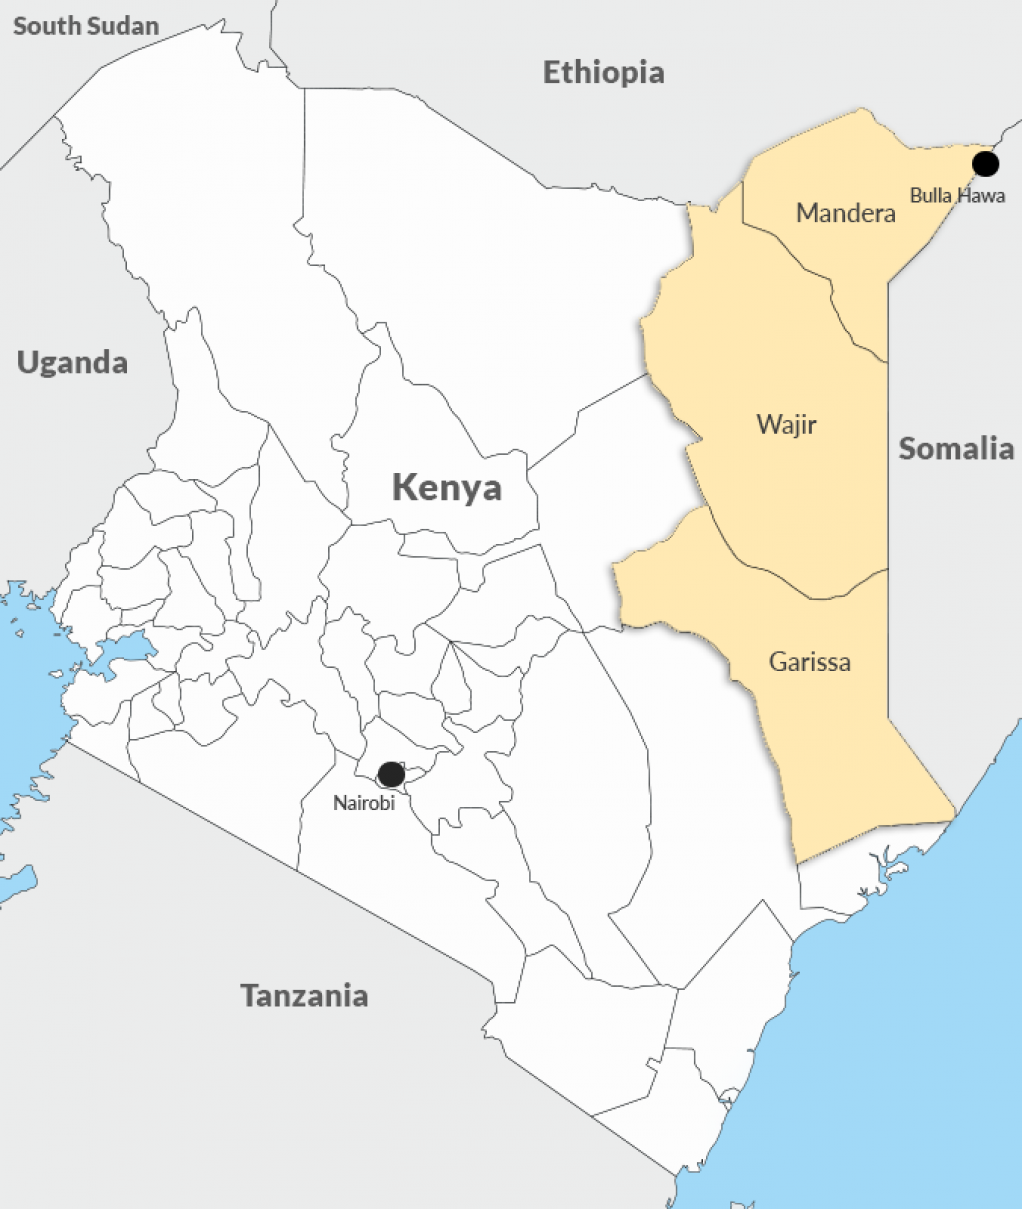  Winning community trust can help rid Kenya of al-Shabaab 